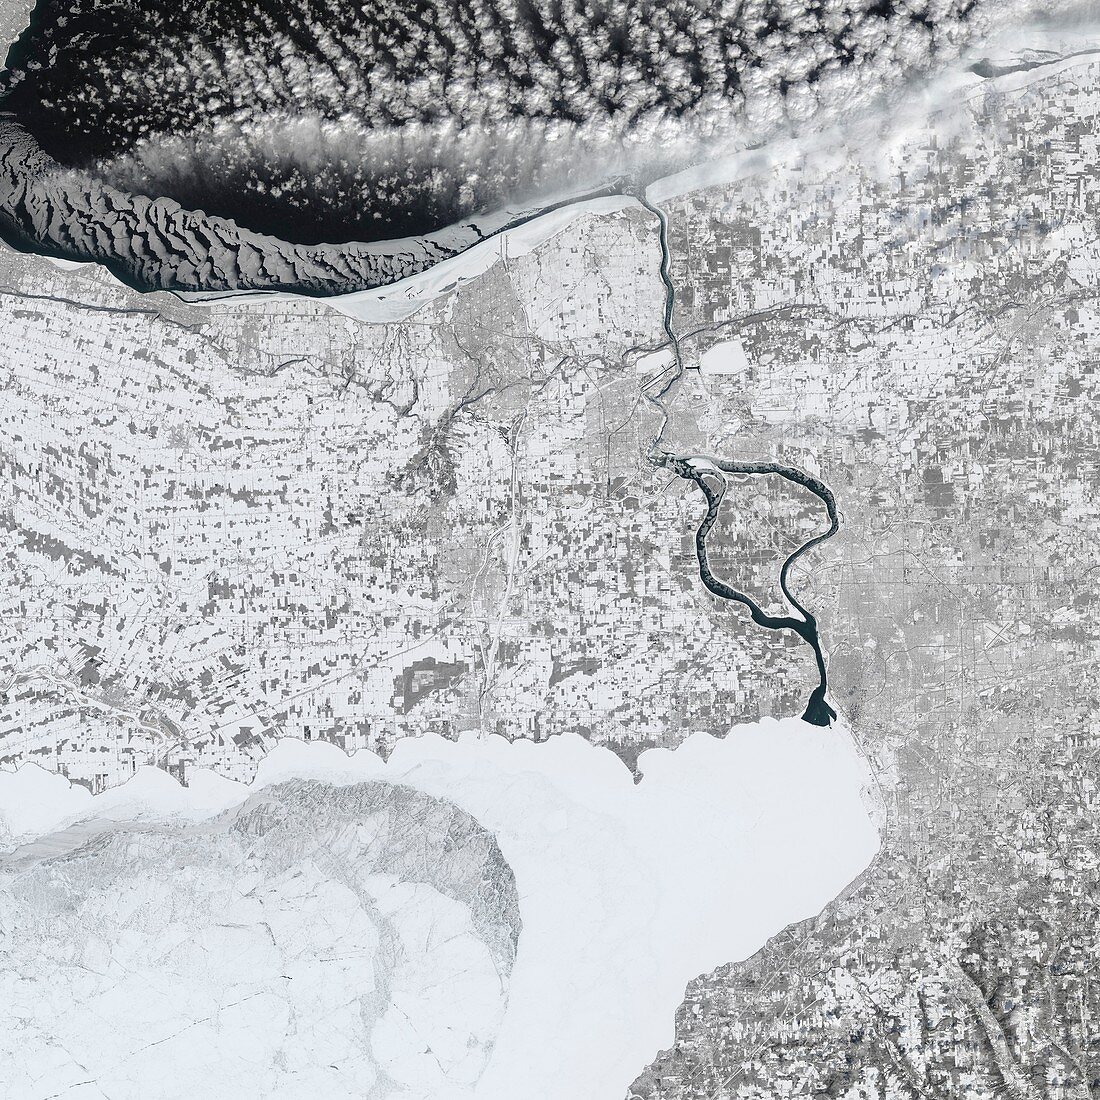 Frozen Great Lakes,winter 2015